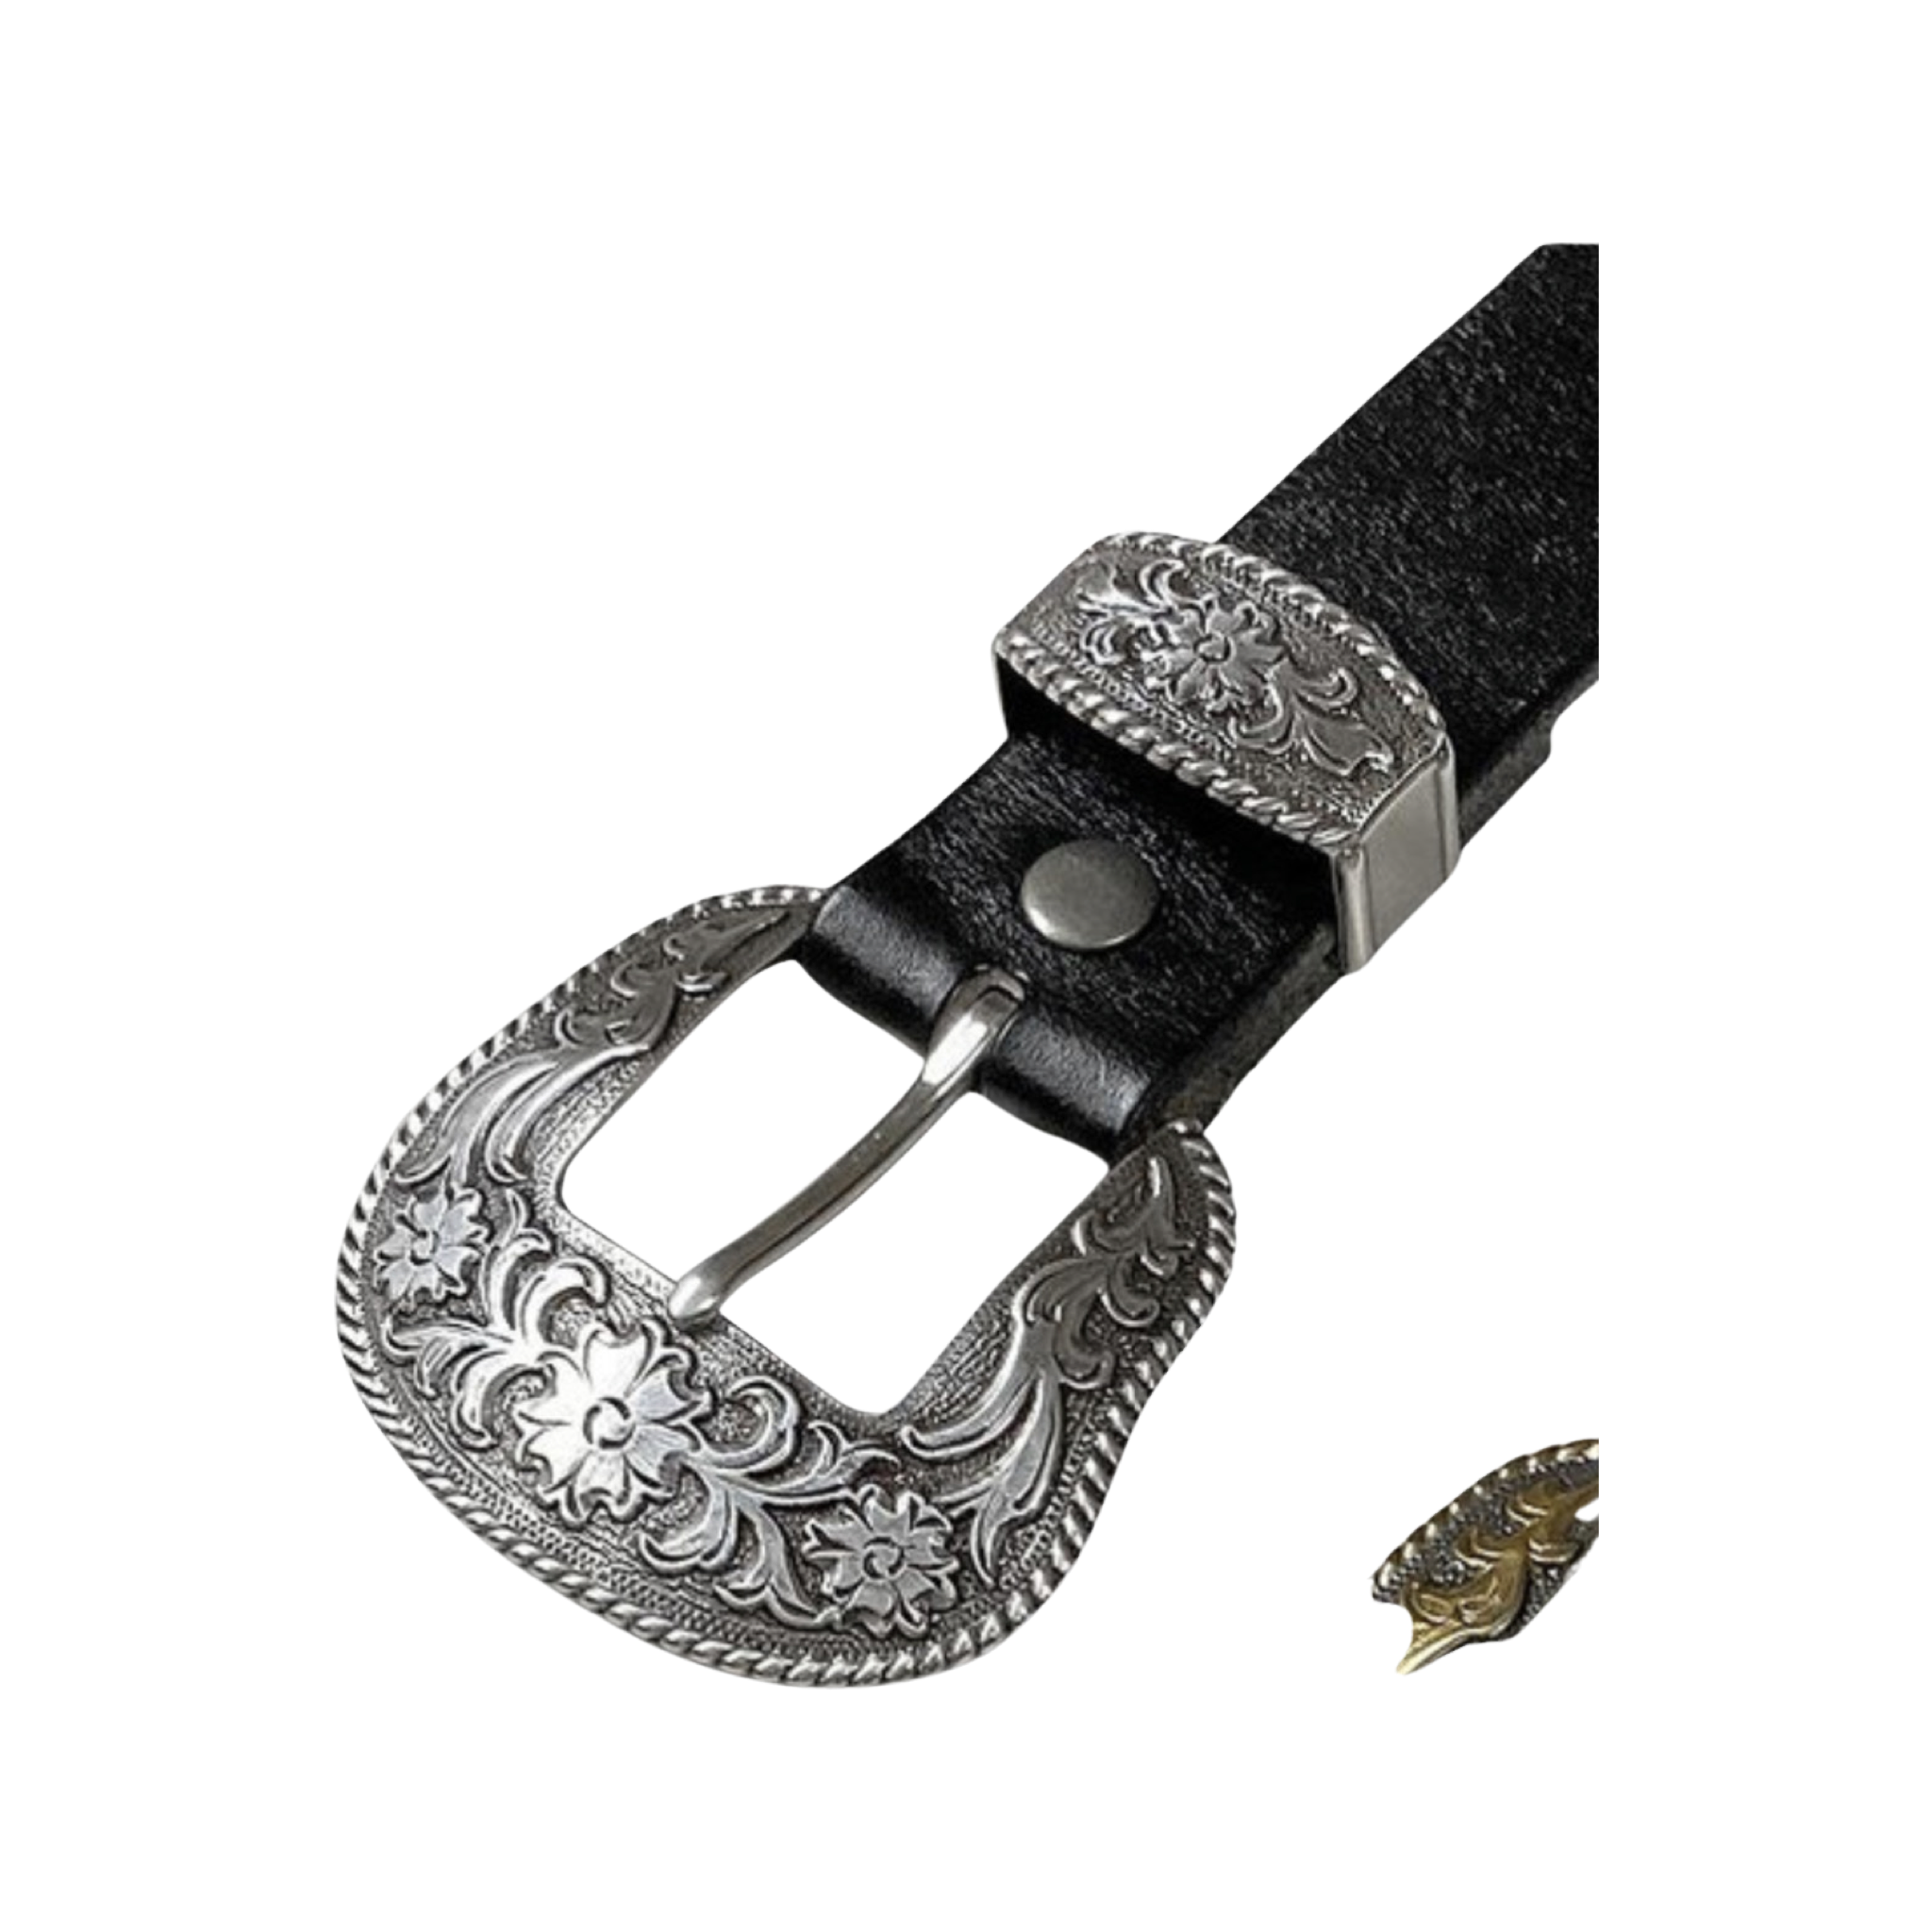 Silver belt with buckle belt